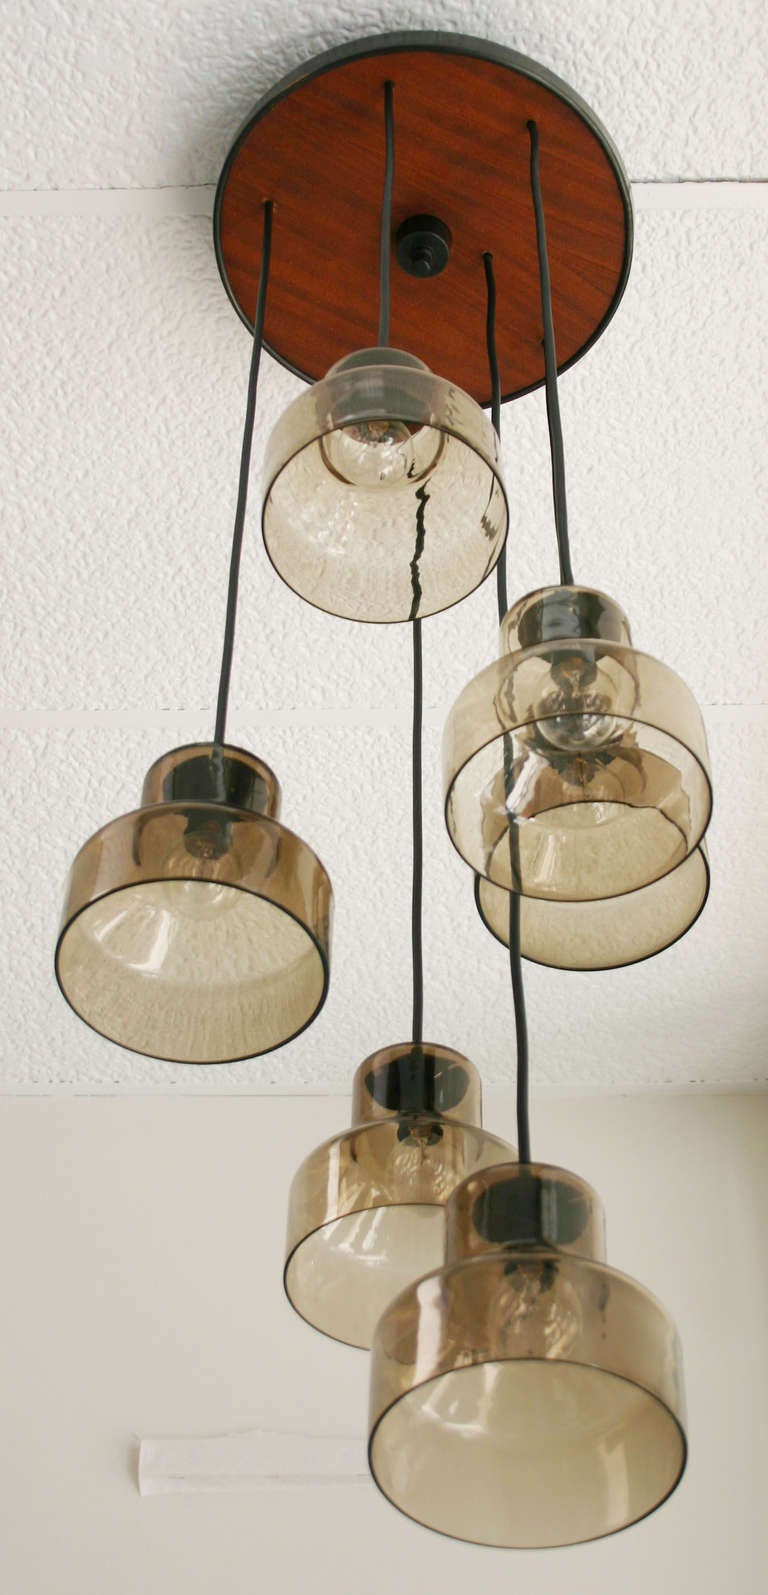 Handsome Danish pendant consisting of six smoke glass lamps hung from black enamel and teak ceiling 14" diameter framework.